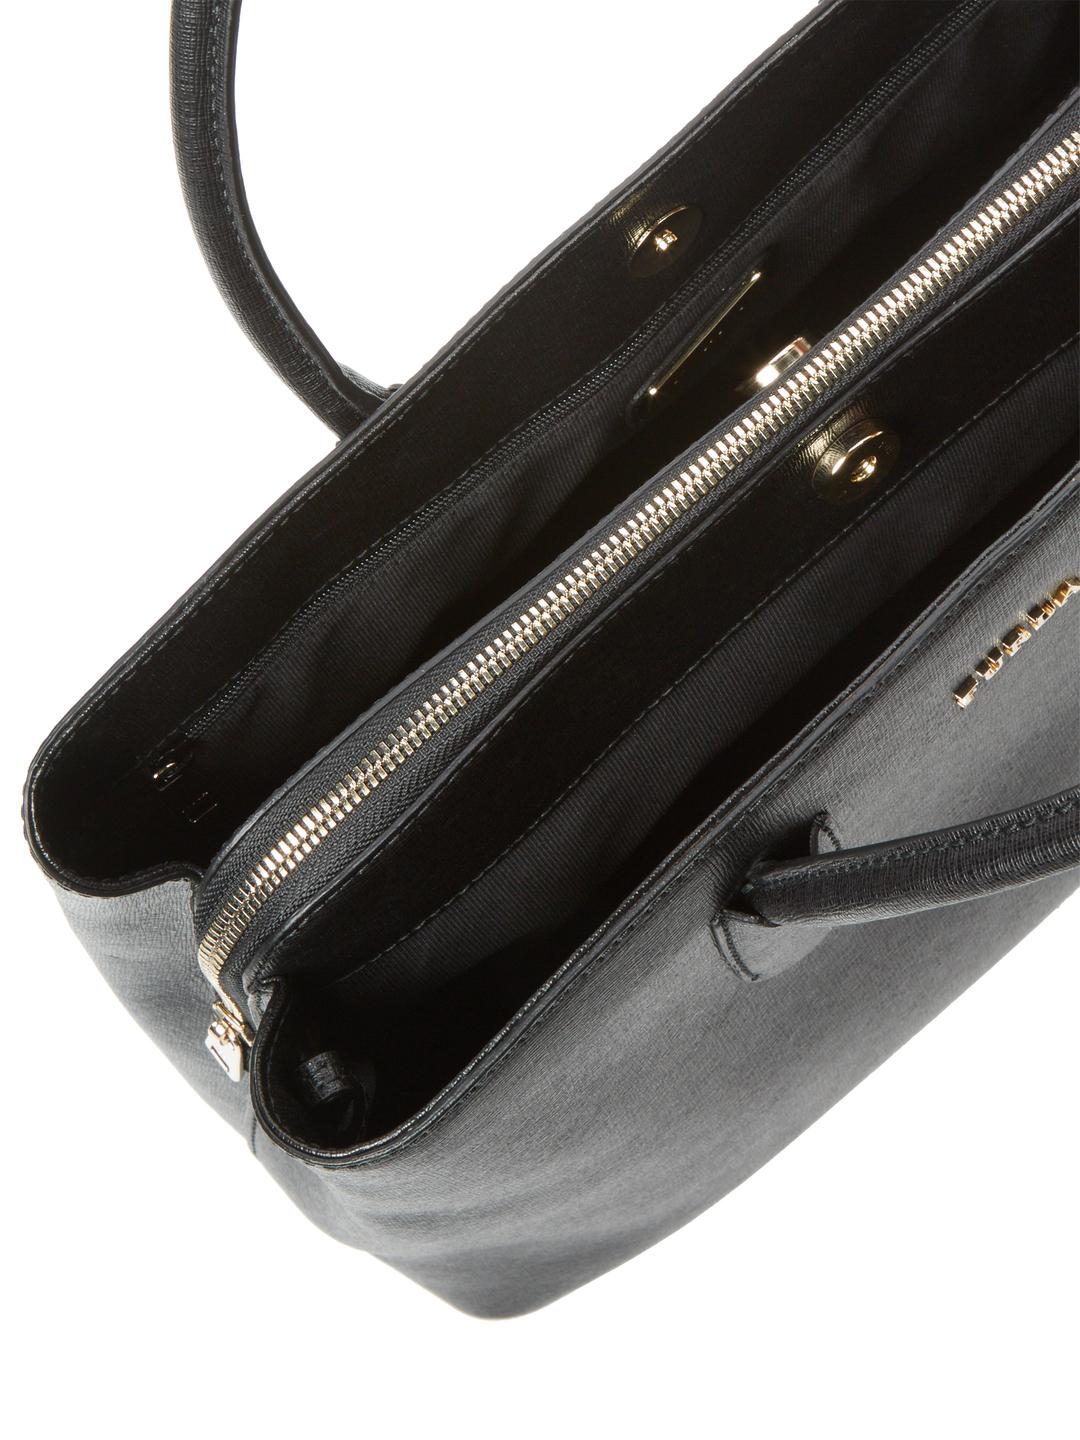 Furla Leather Tessa Large Tote Bag in Onyx (Black) - Lyst